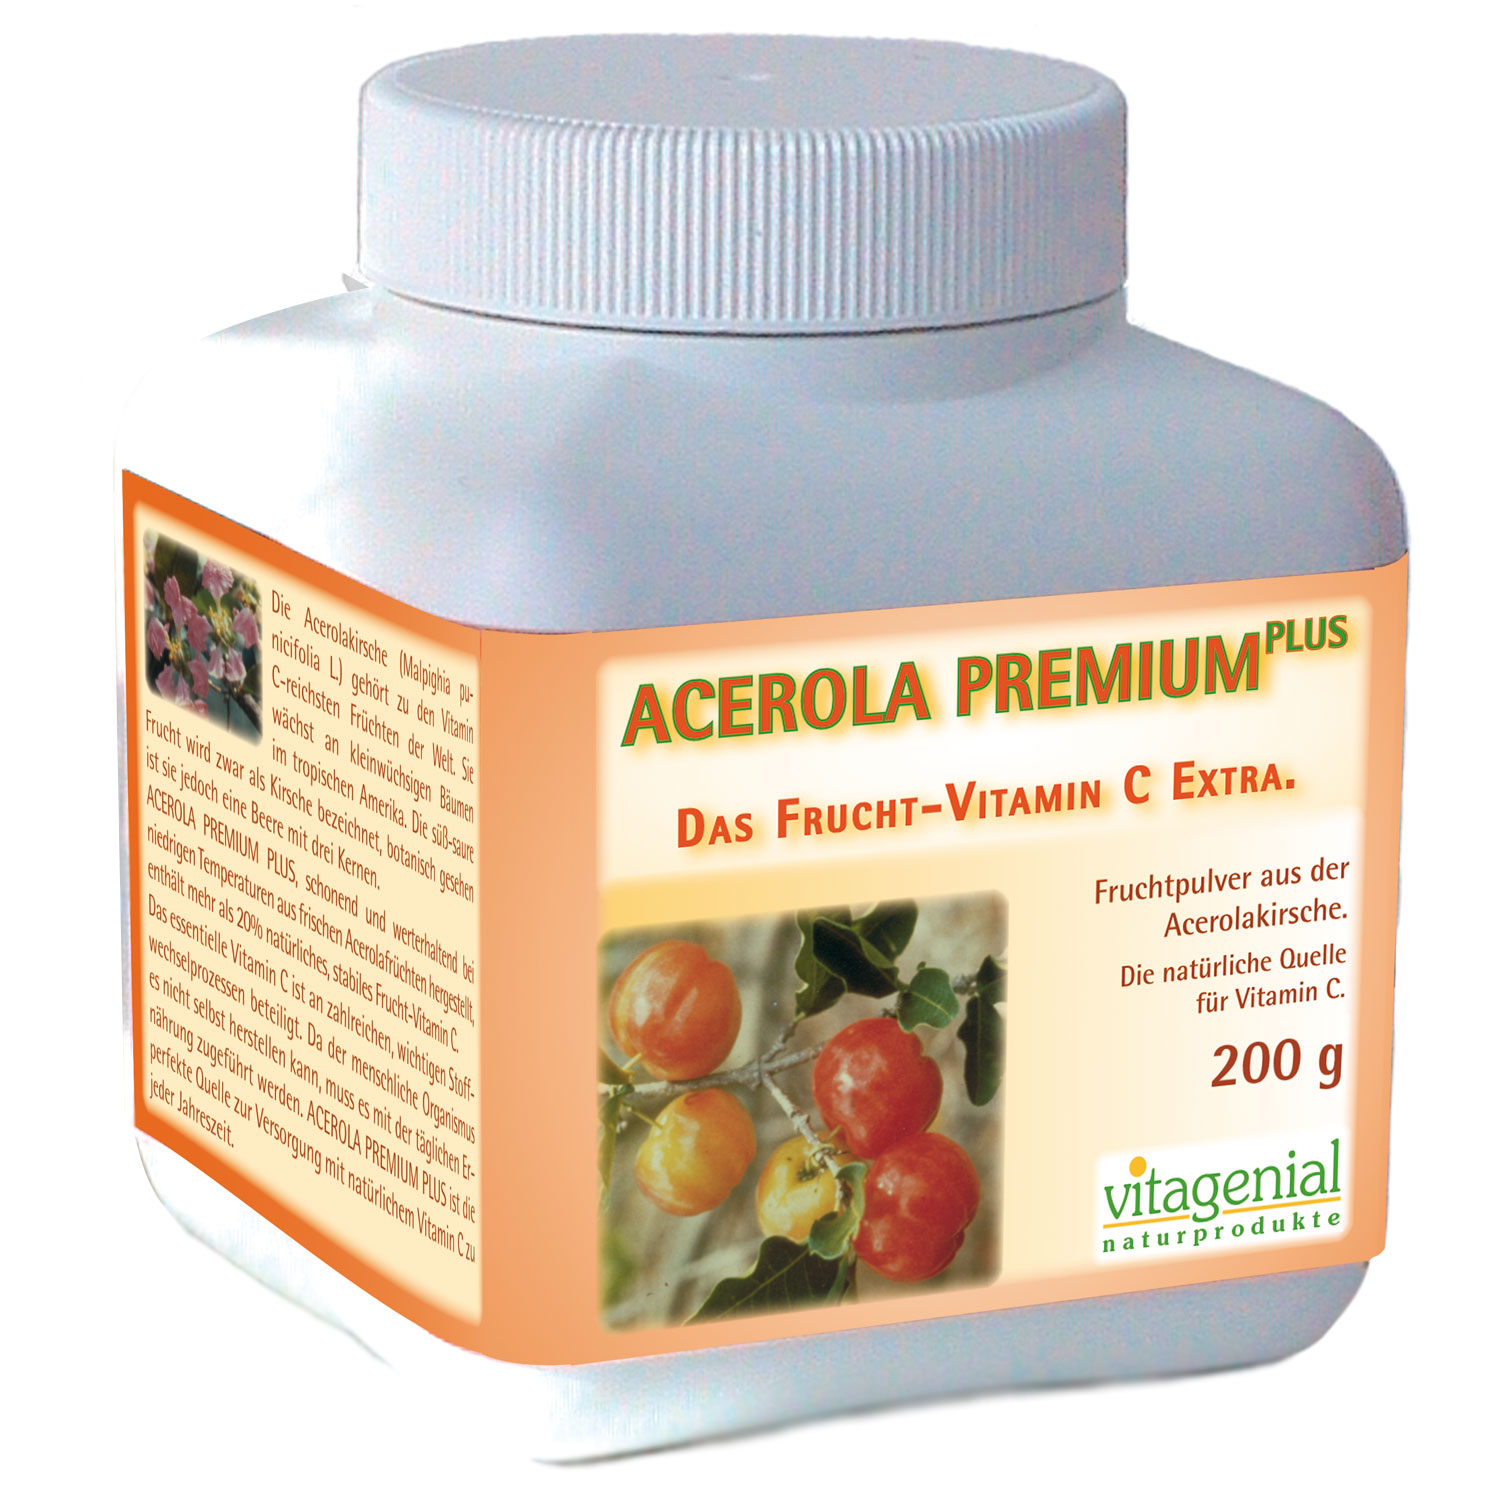 Acerola Premium von Biogenial - 200g